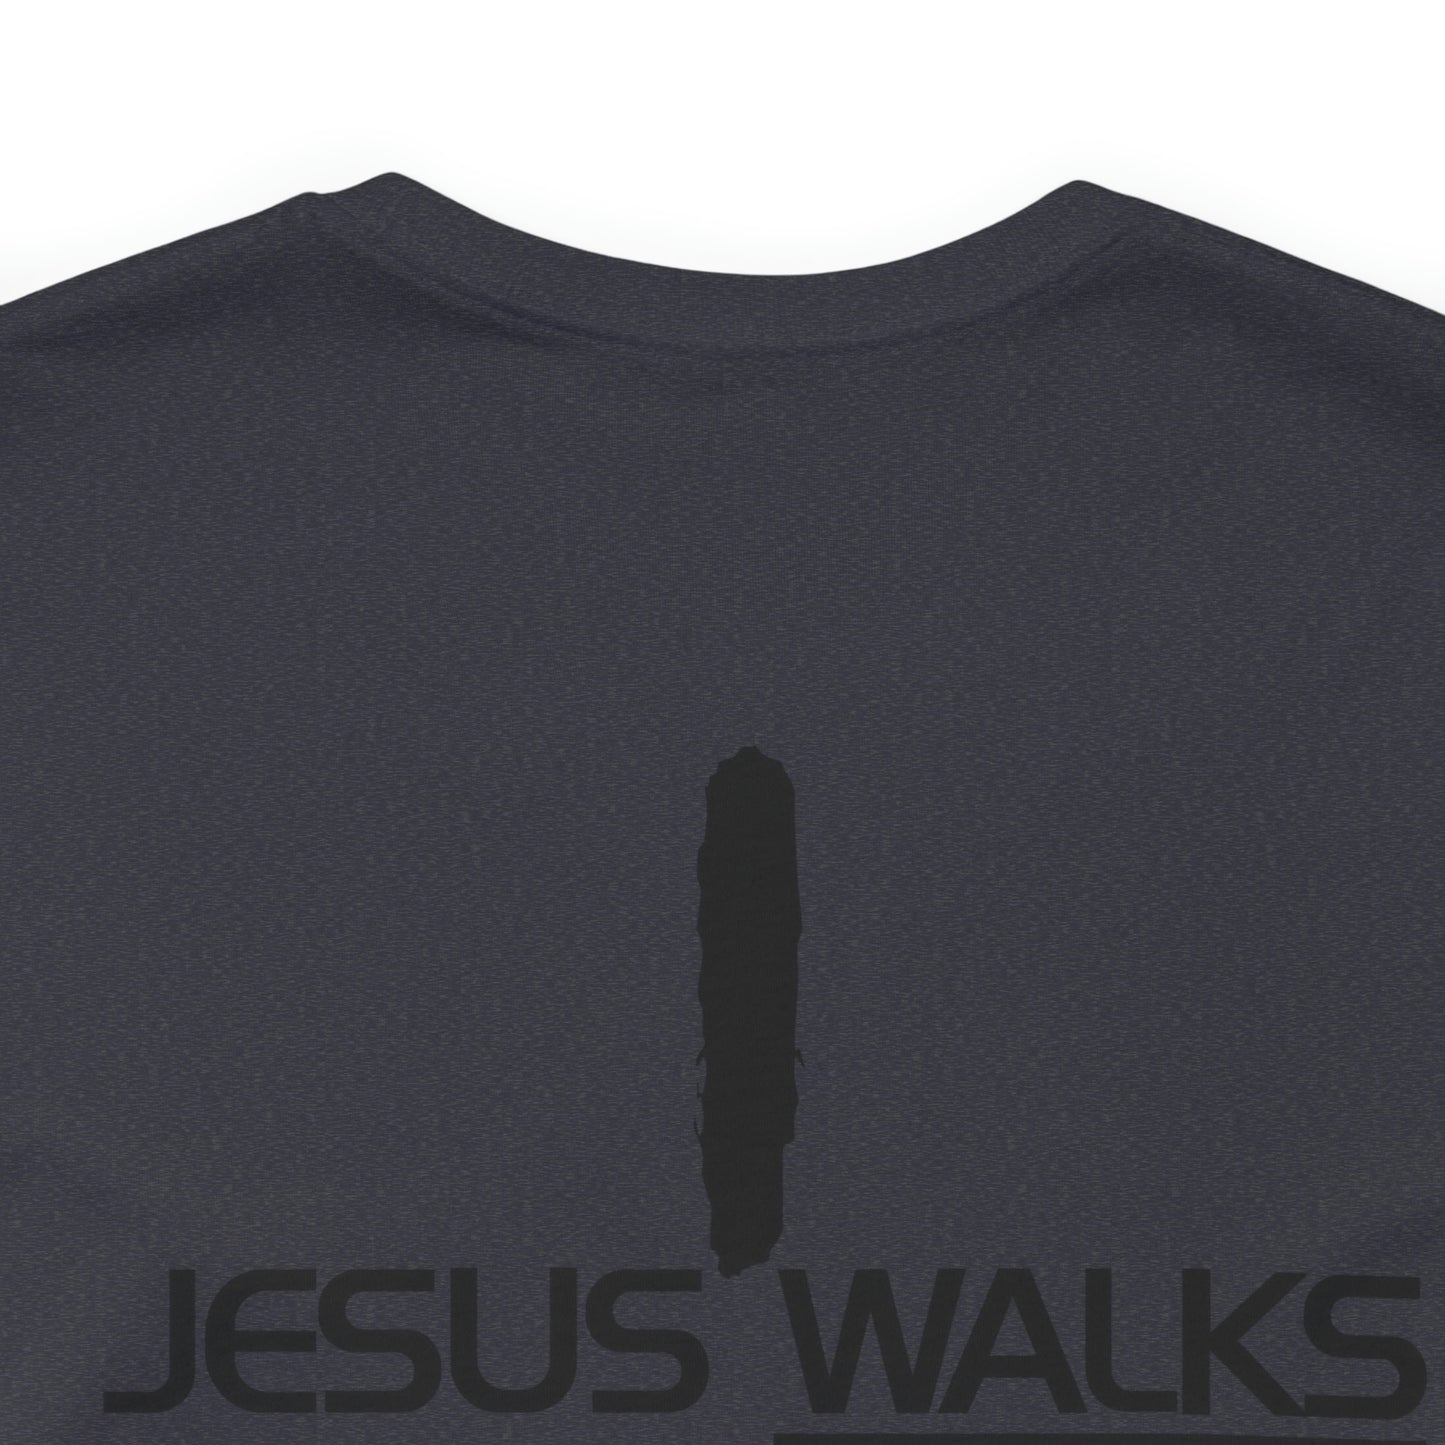 Jesus Walks Unisex Short Sleeve Big Cross Tee